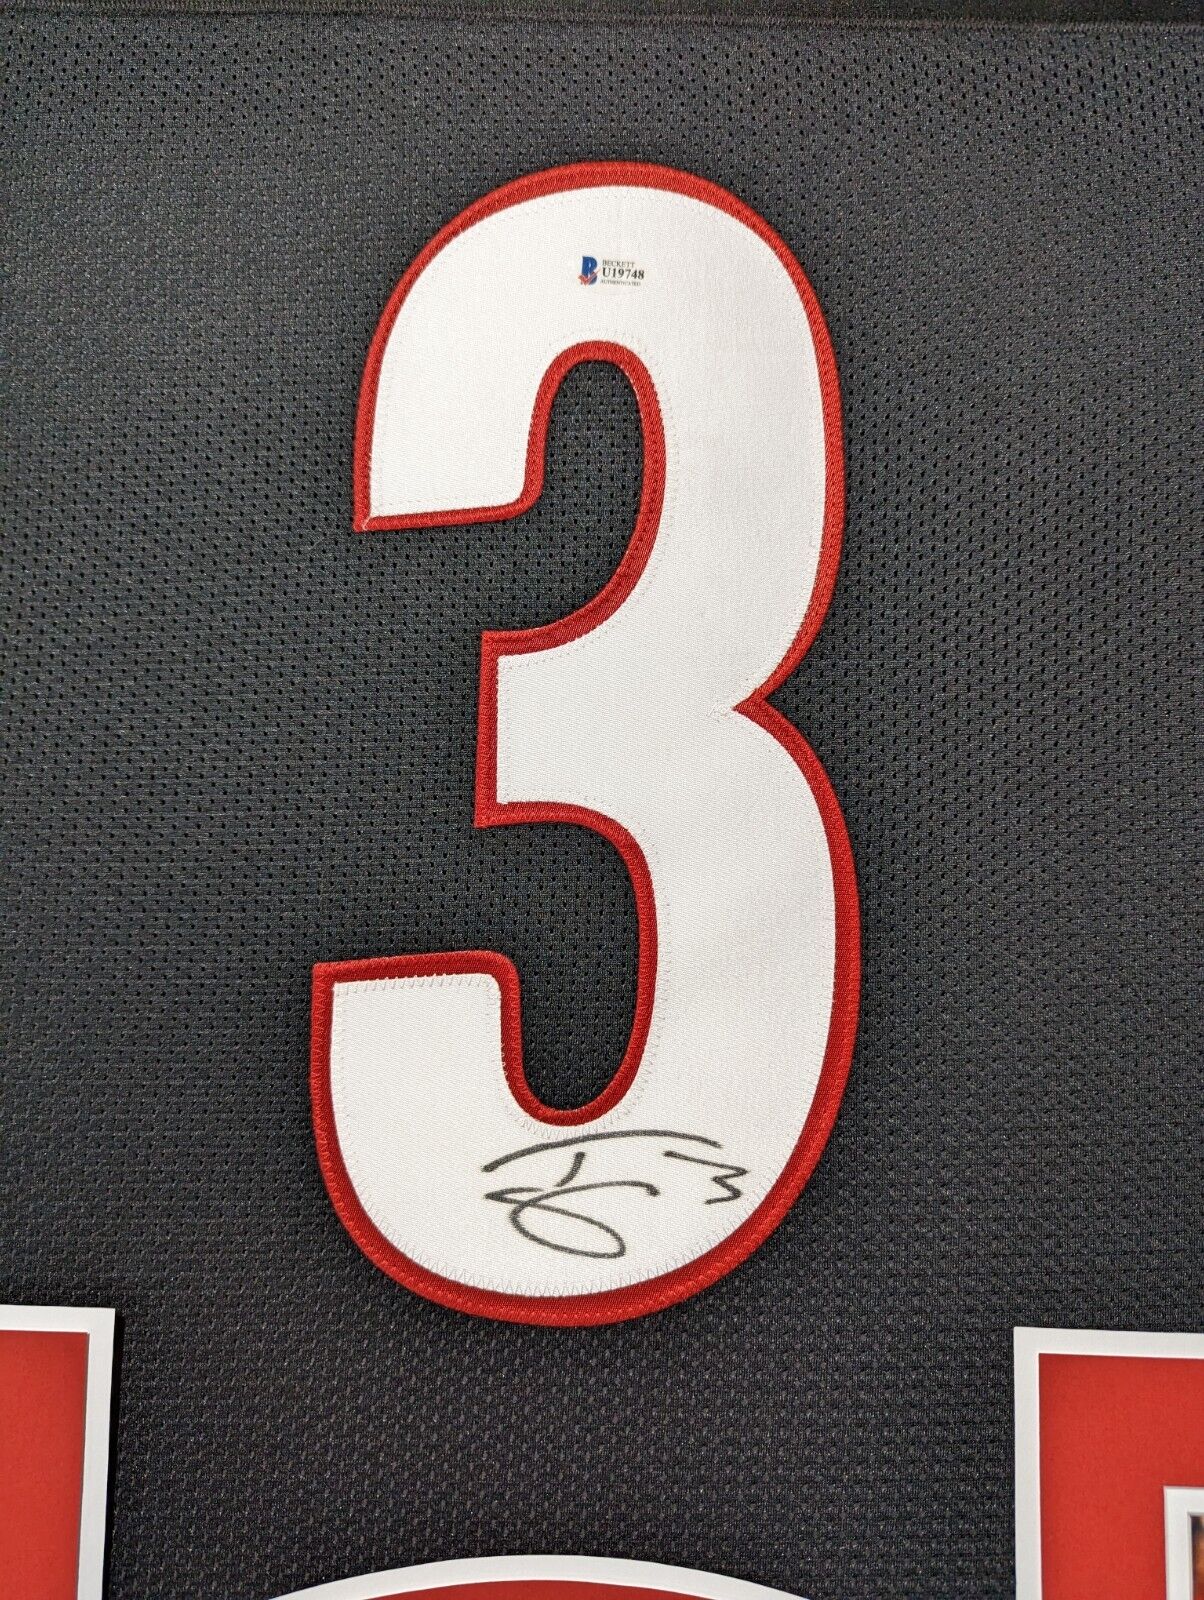 Todd Gurley II Georgia Bulldogs Autographed Red Nike Game Jersey